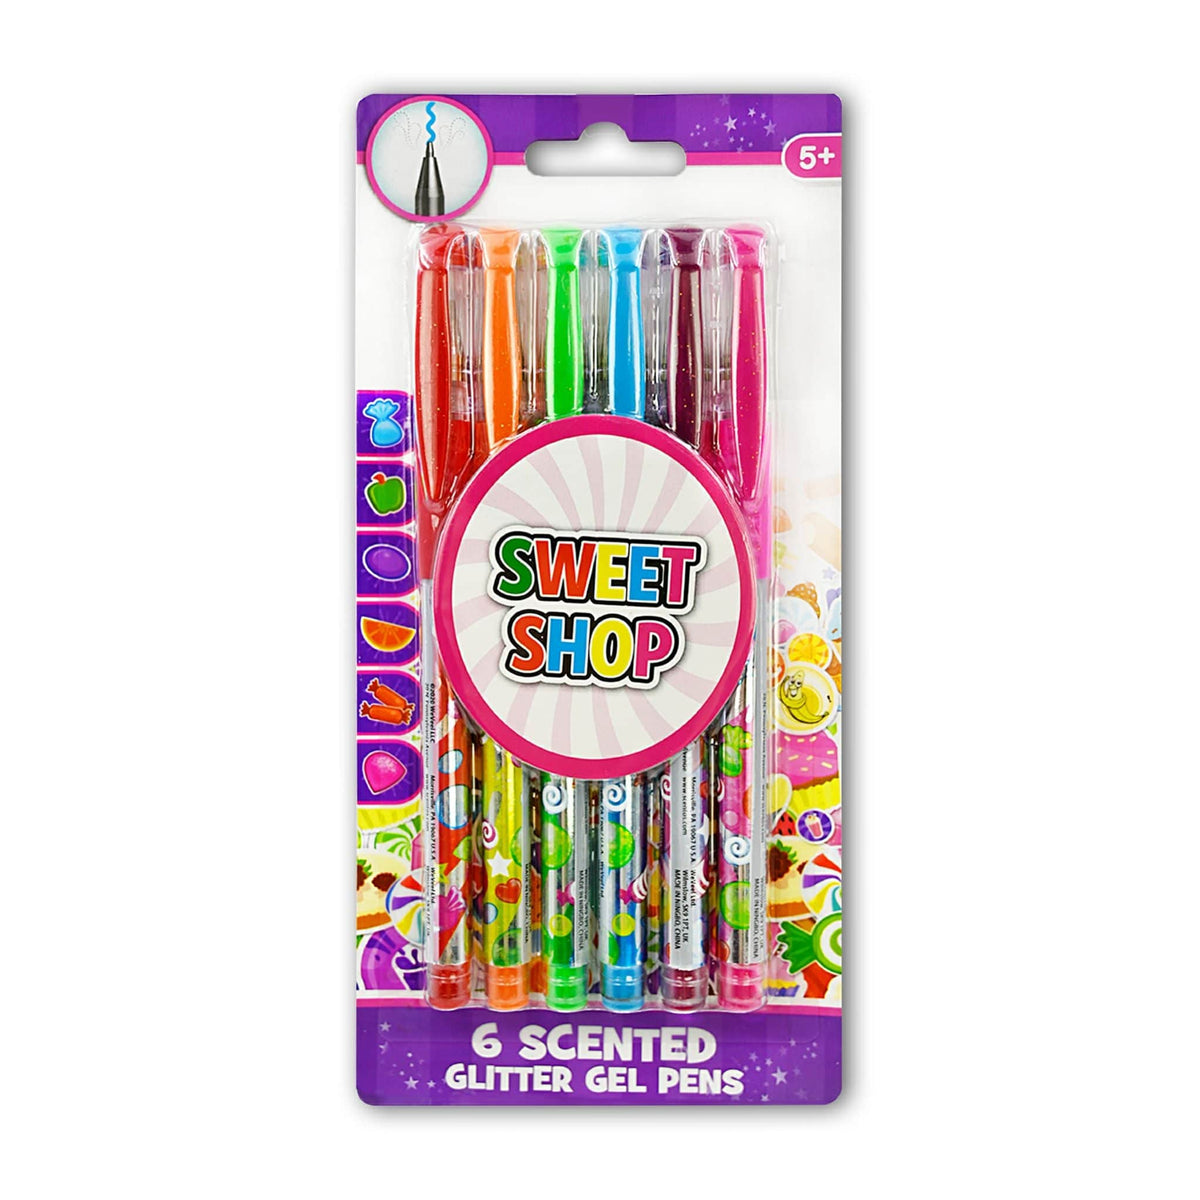 Scentos Sugar Rush  Gel pens, Gel pens coloring, Pen